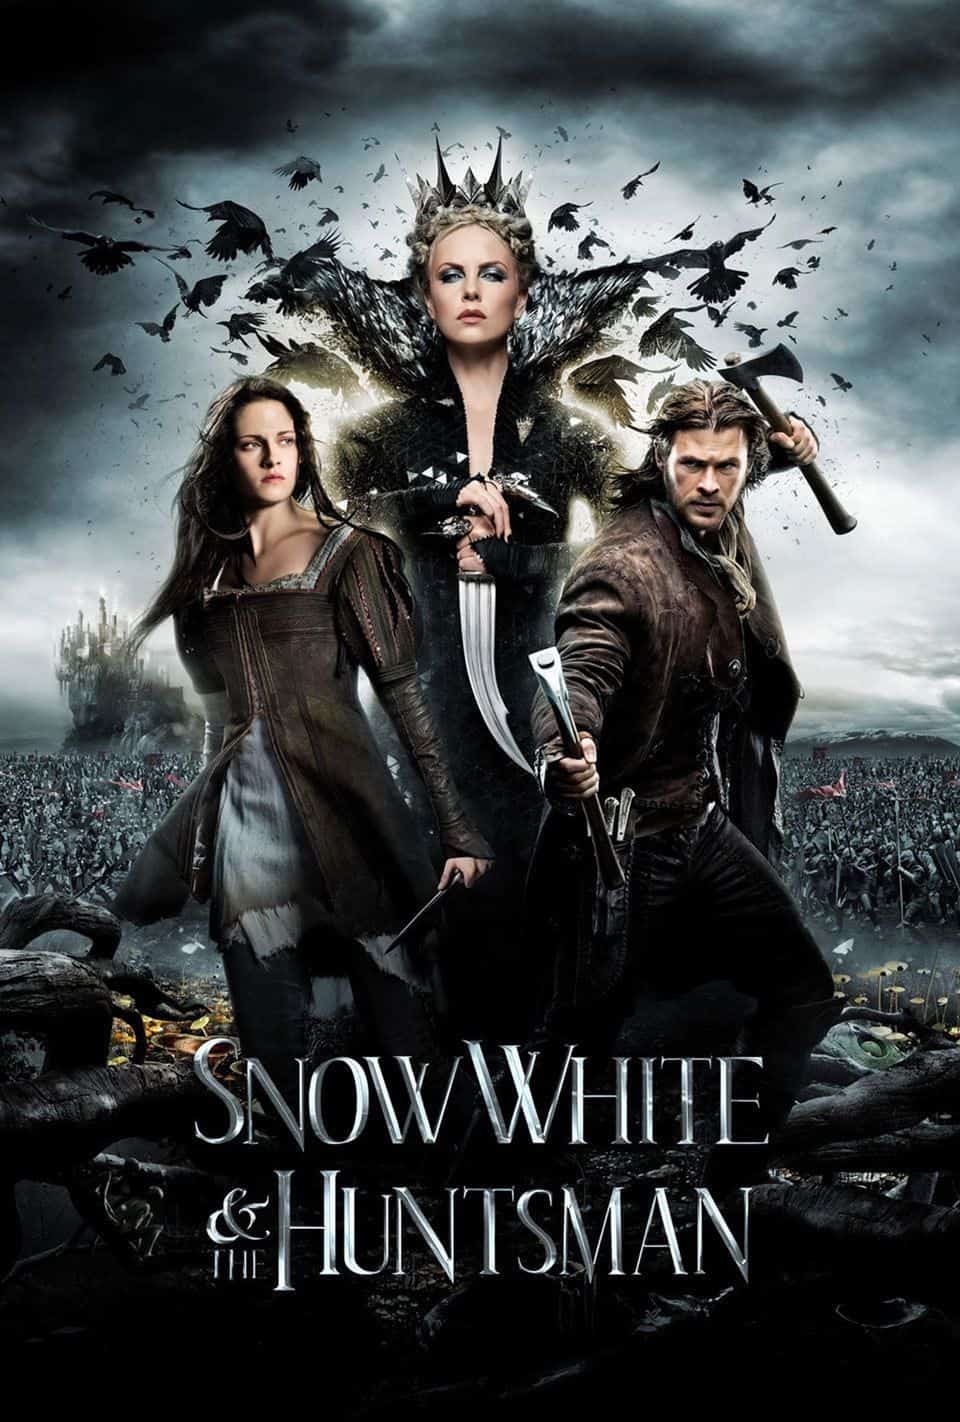 Snow White and the Huntsman film poster starring Kristen Stewart and Chris Hemsworth